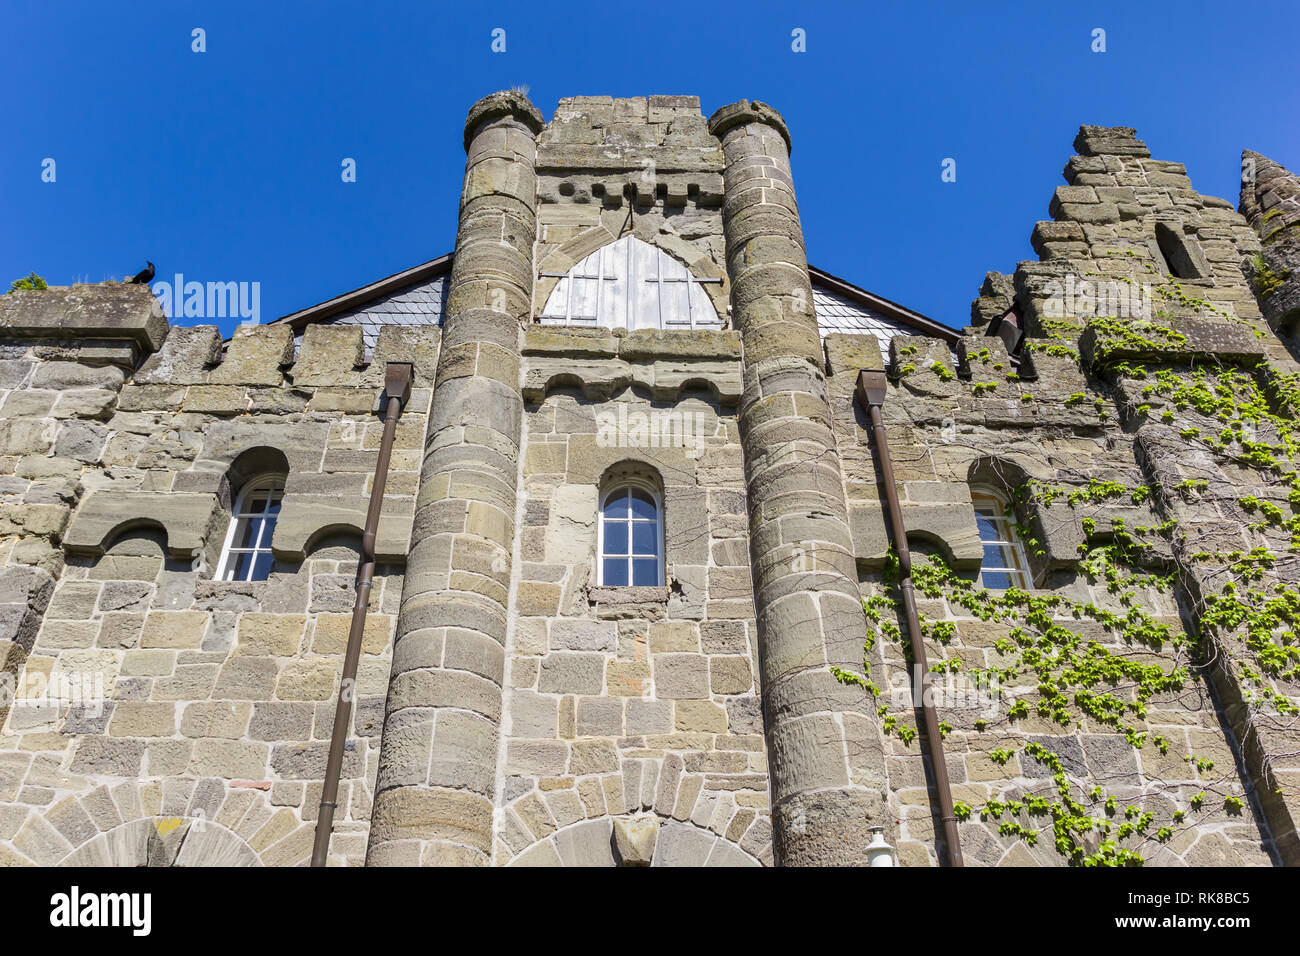 Facade of the Lowenburg castle in Kassel, Germany Stock Photo